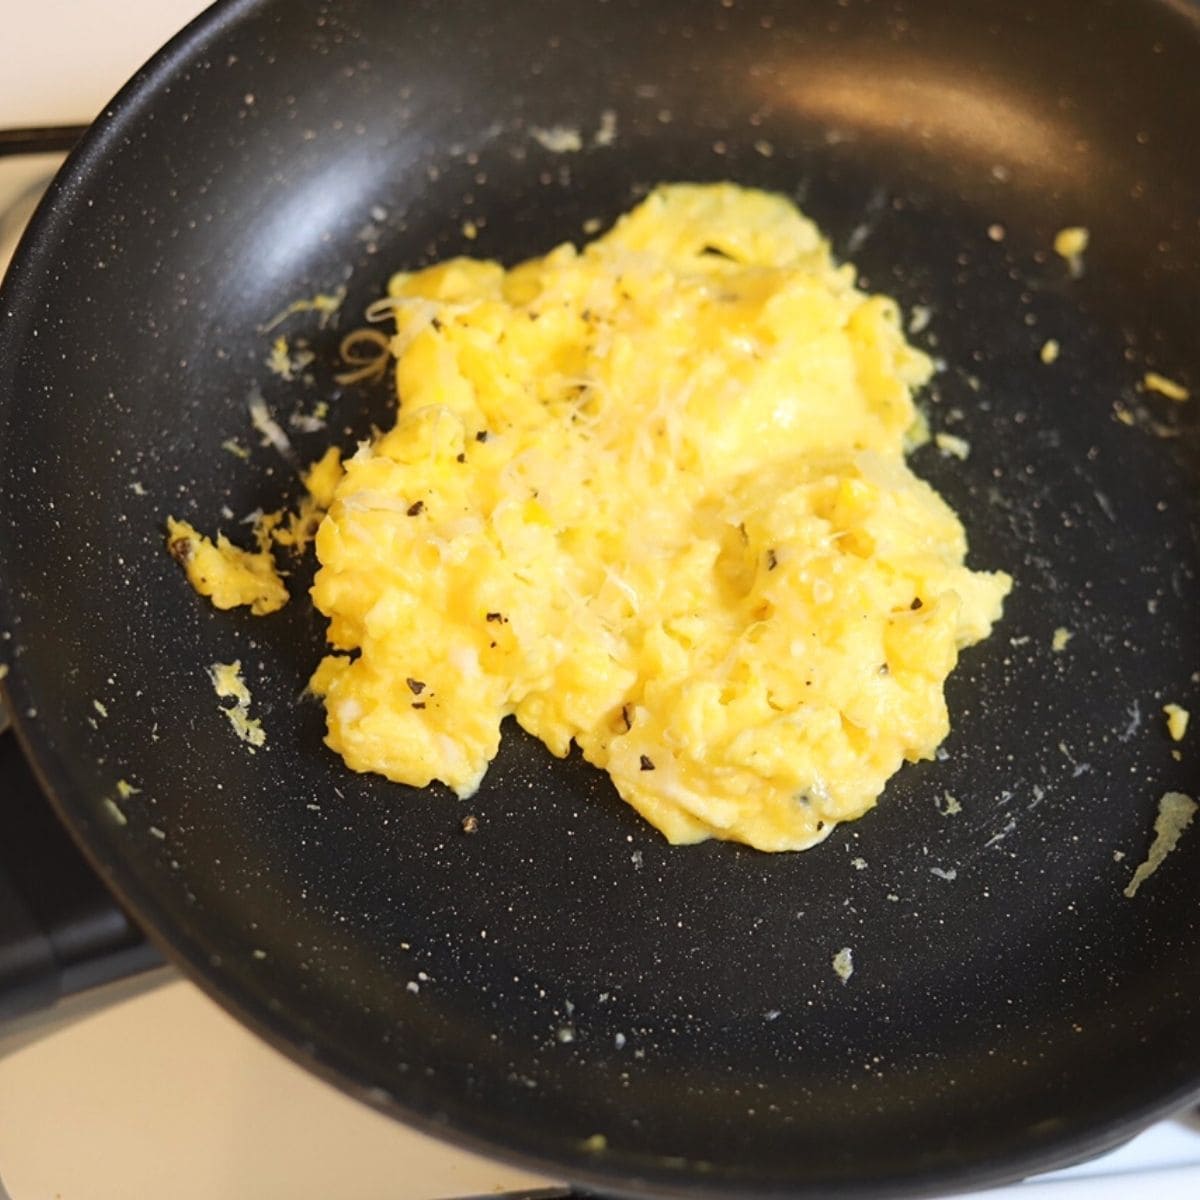 Scrambled eggs in a non stick skillet.